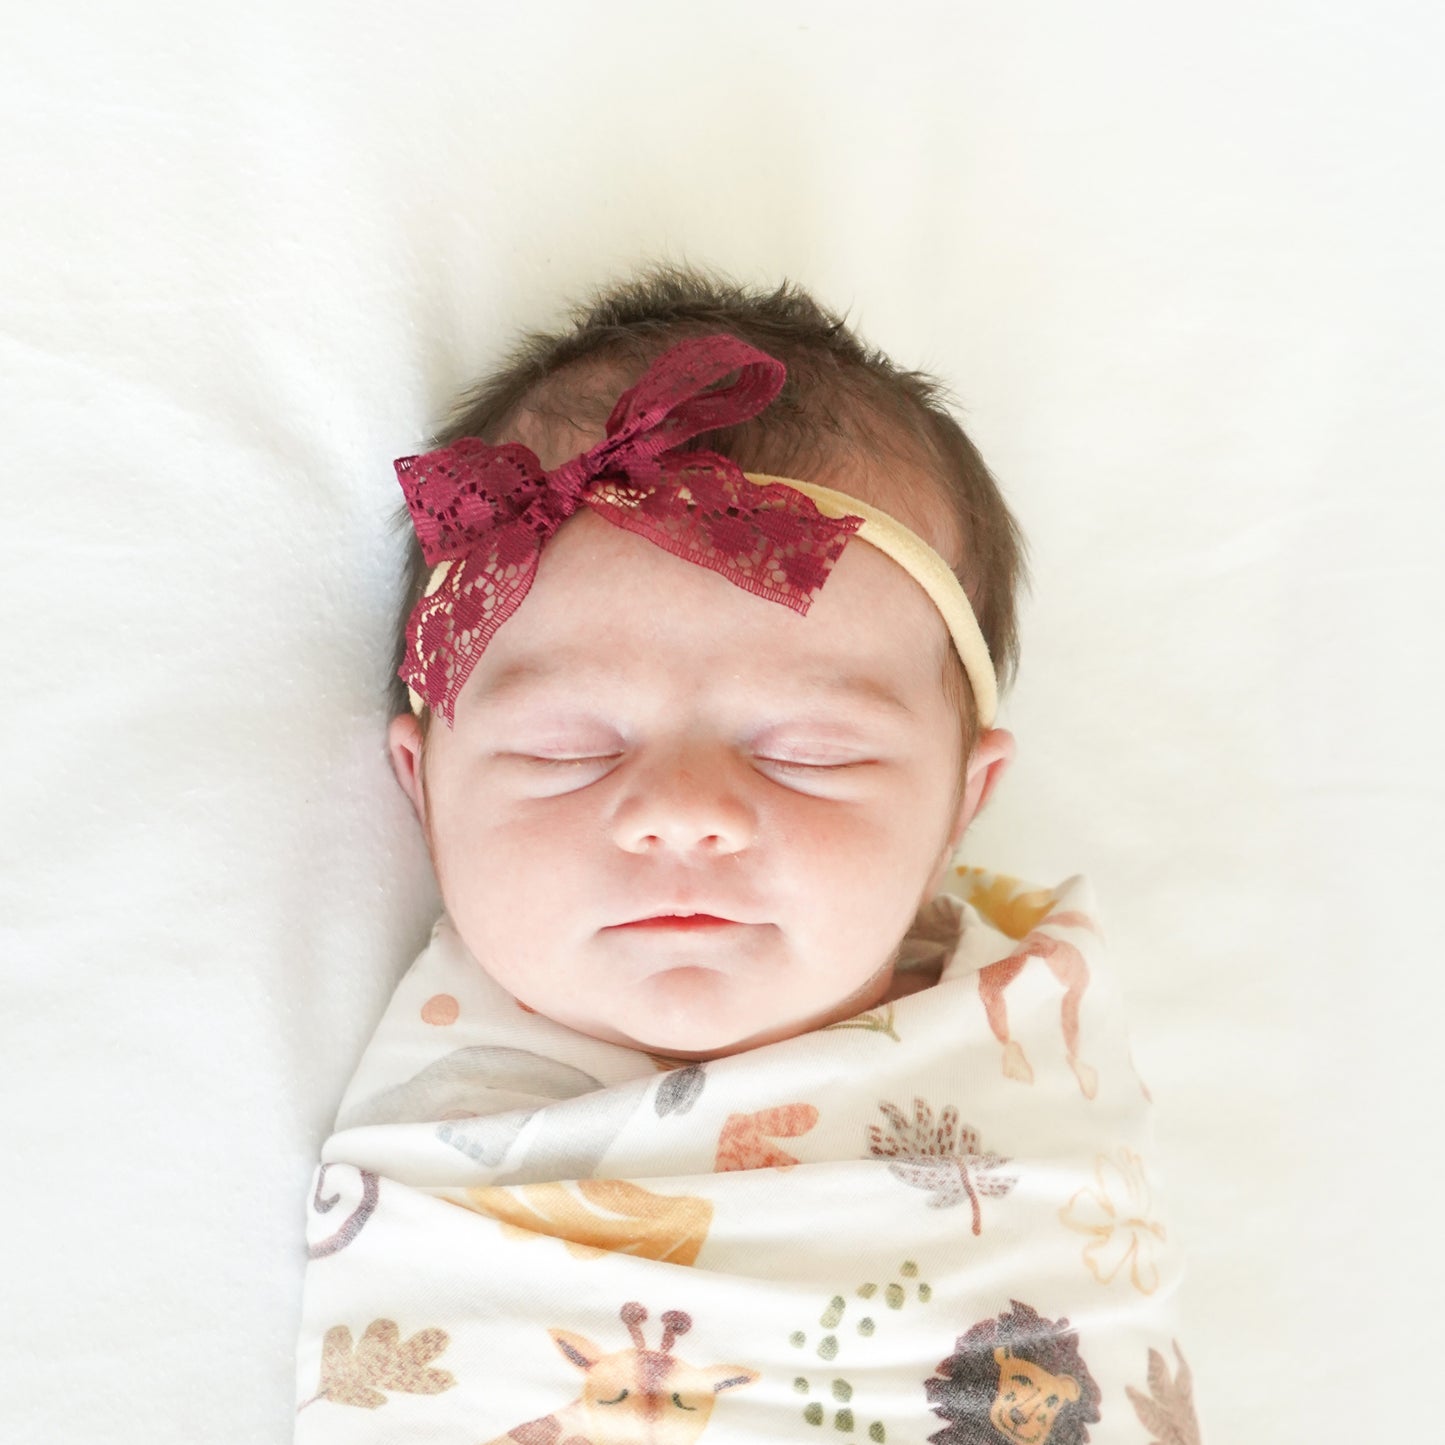 swaddled baby wearing headband with lace burgundy bow 